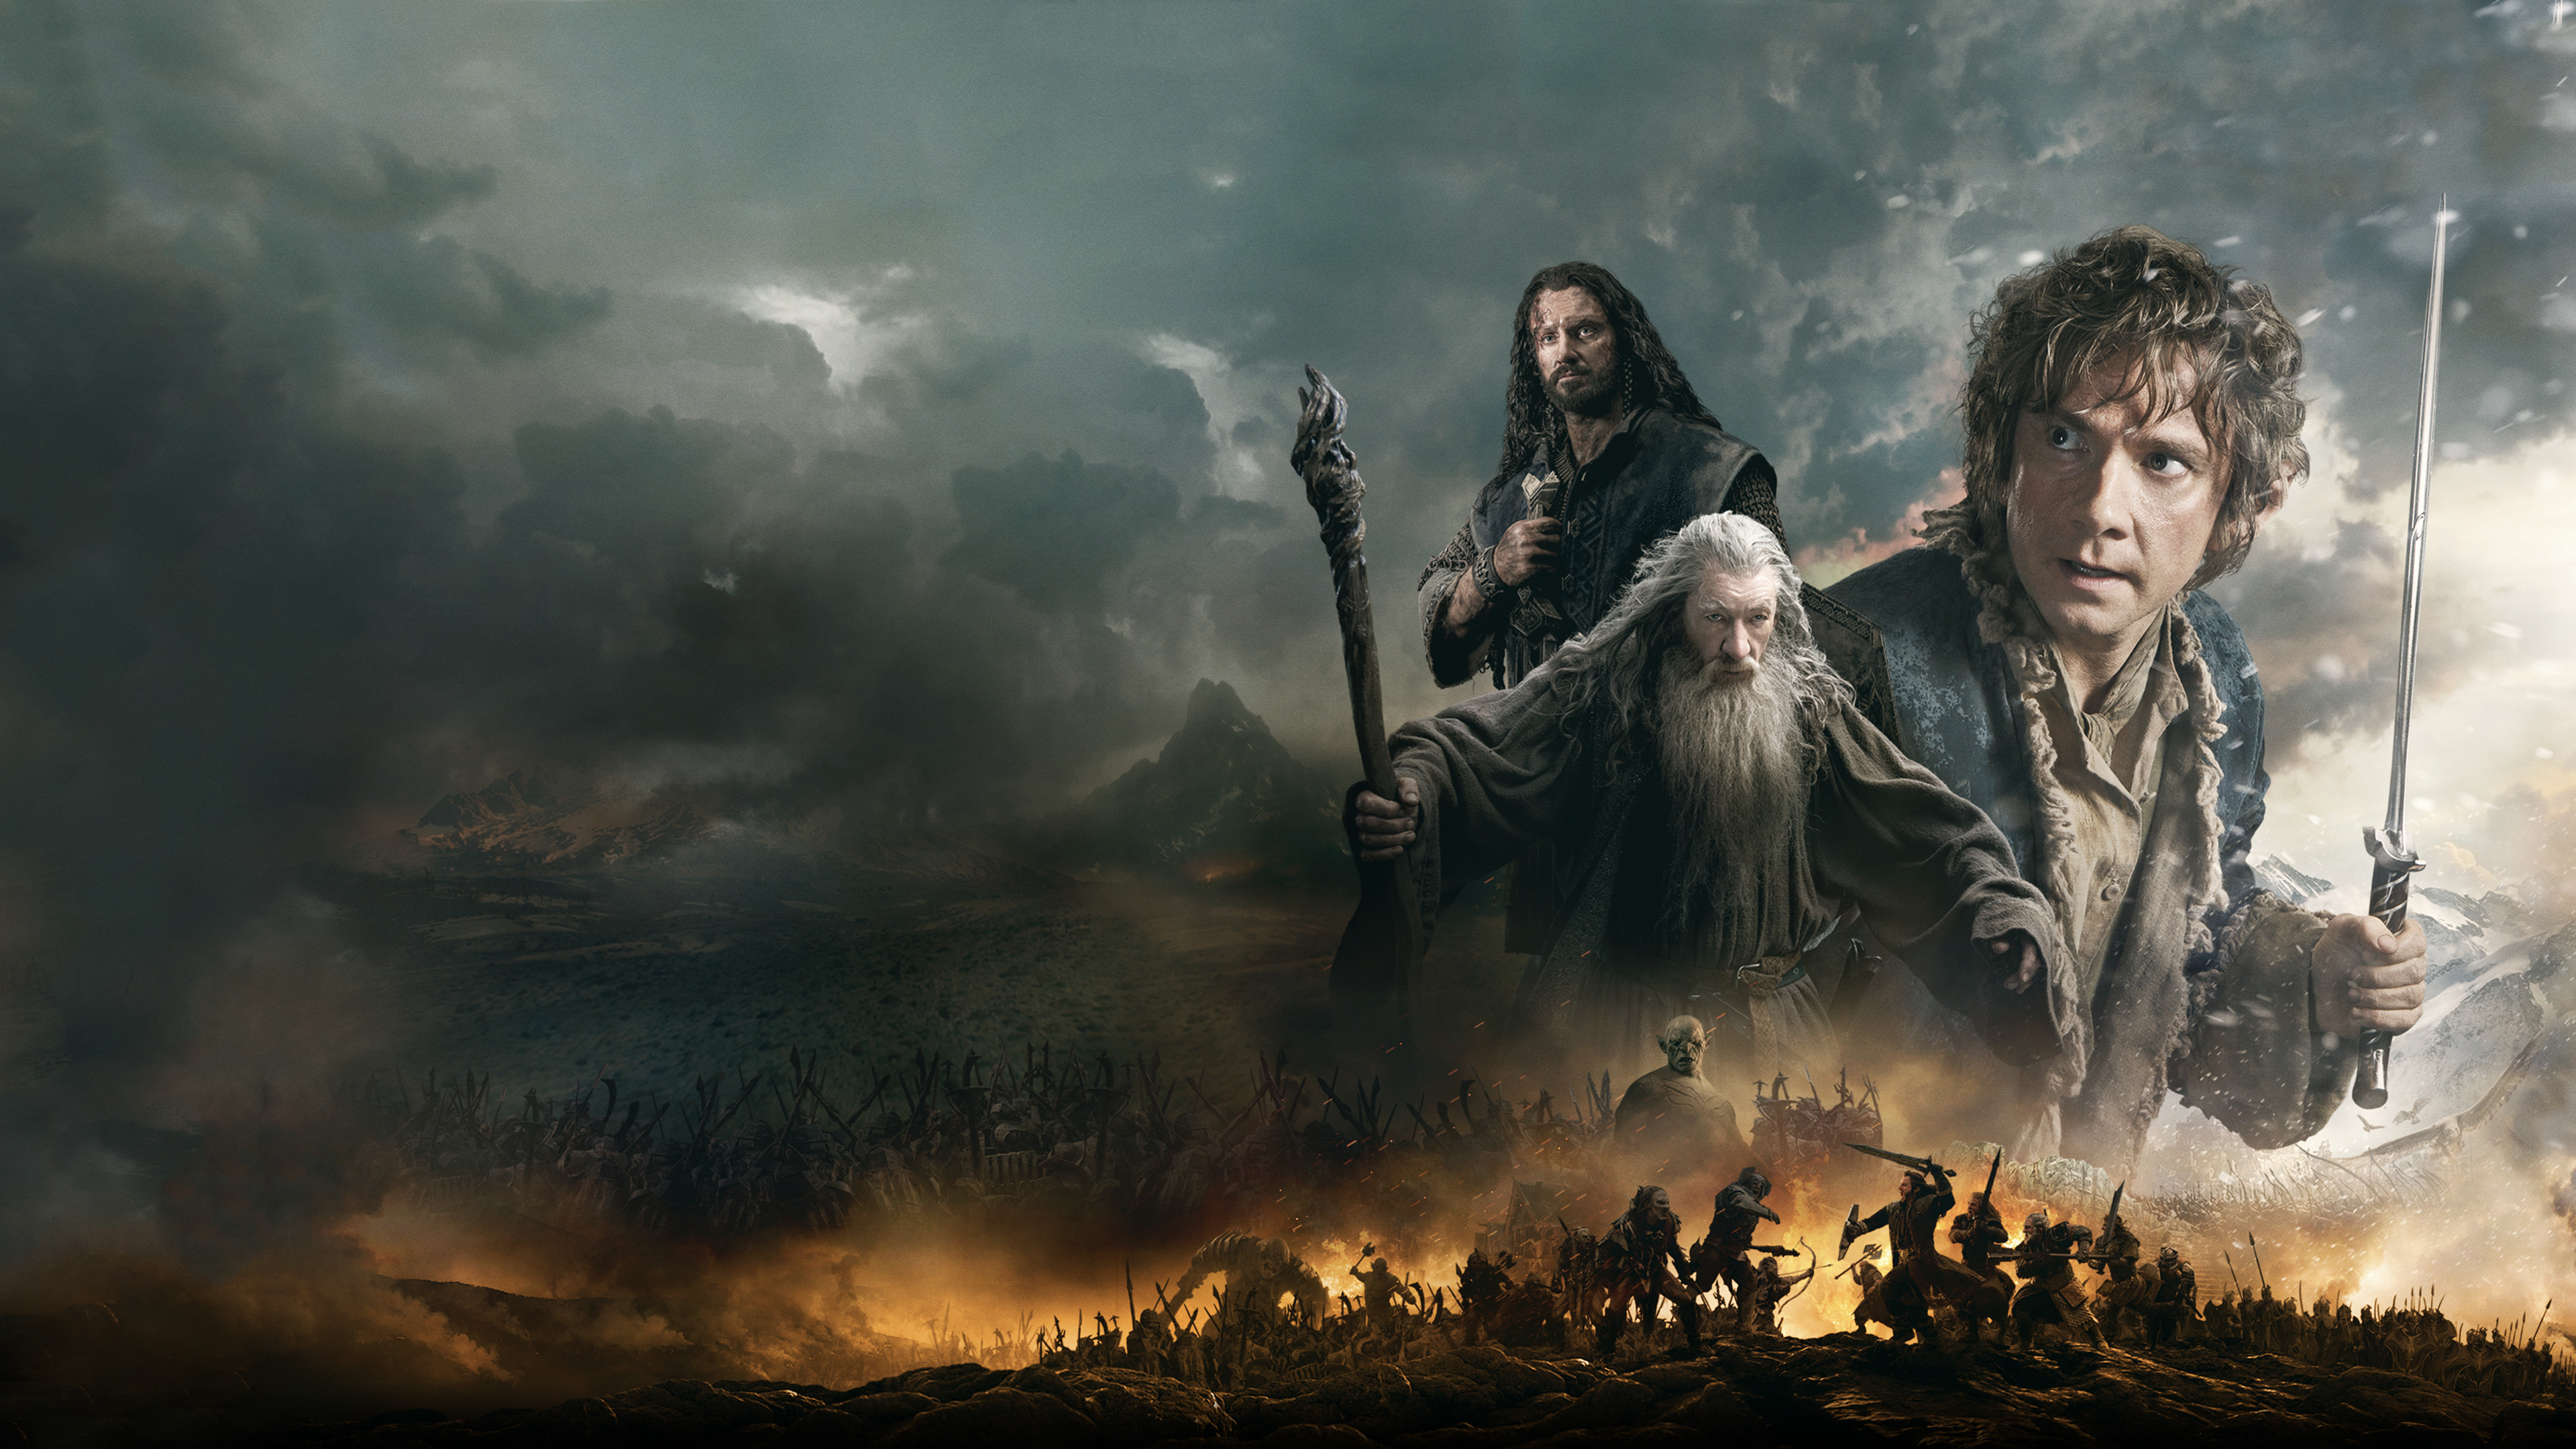 Gandalf, Battle scenes, Epic fantasy, 4K wallpaper, 3840x2160 4K Desktop